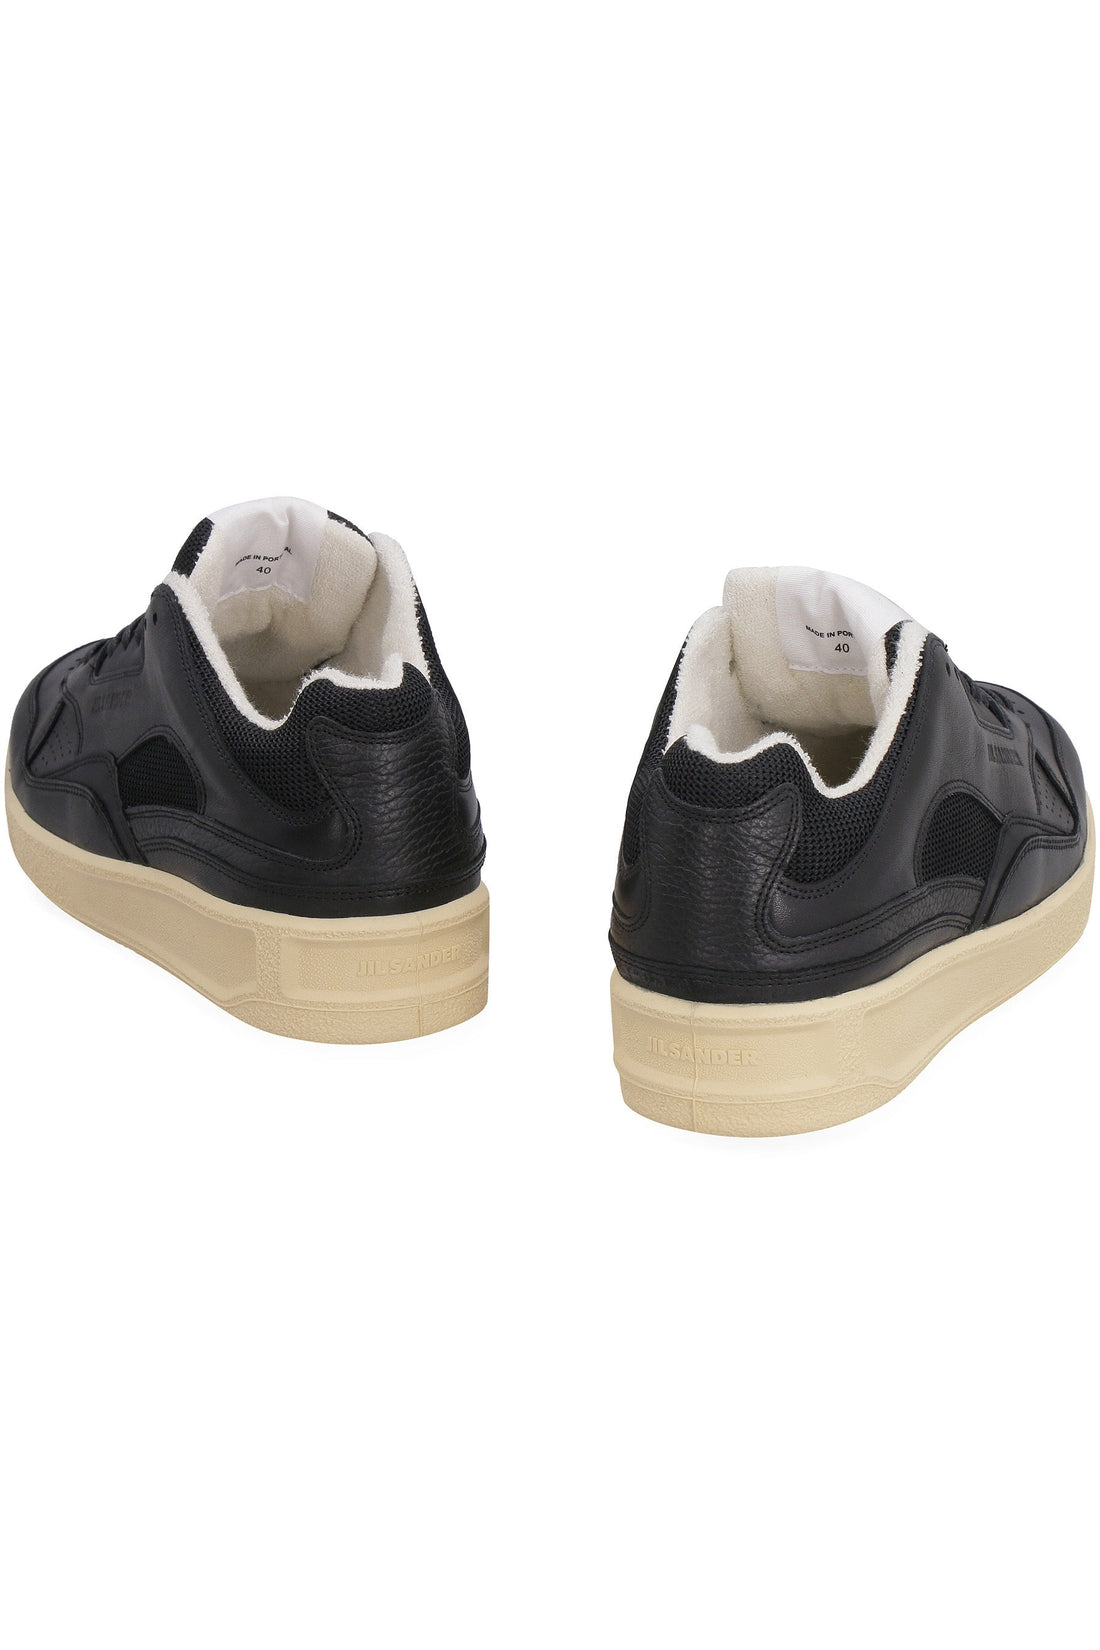 Jil Sander-OUTLET-SALE-Leather low-top sneakers-ARCHIVIST